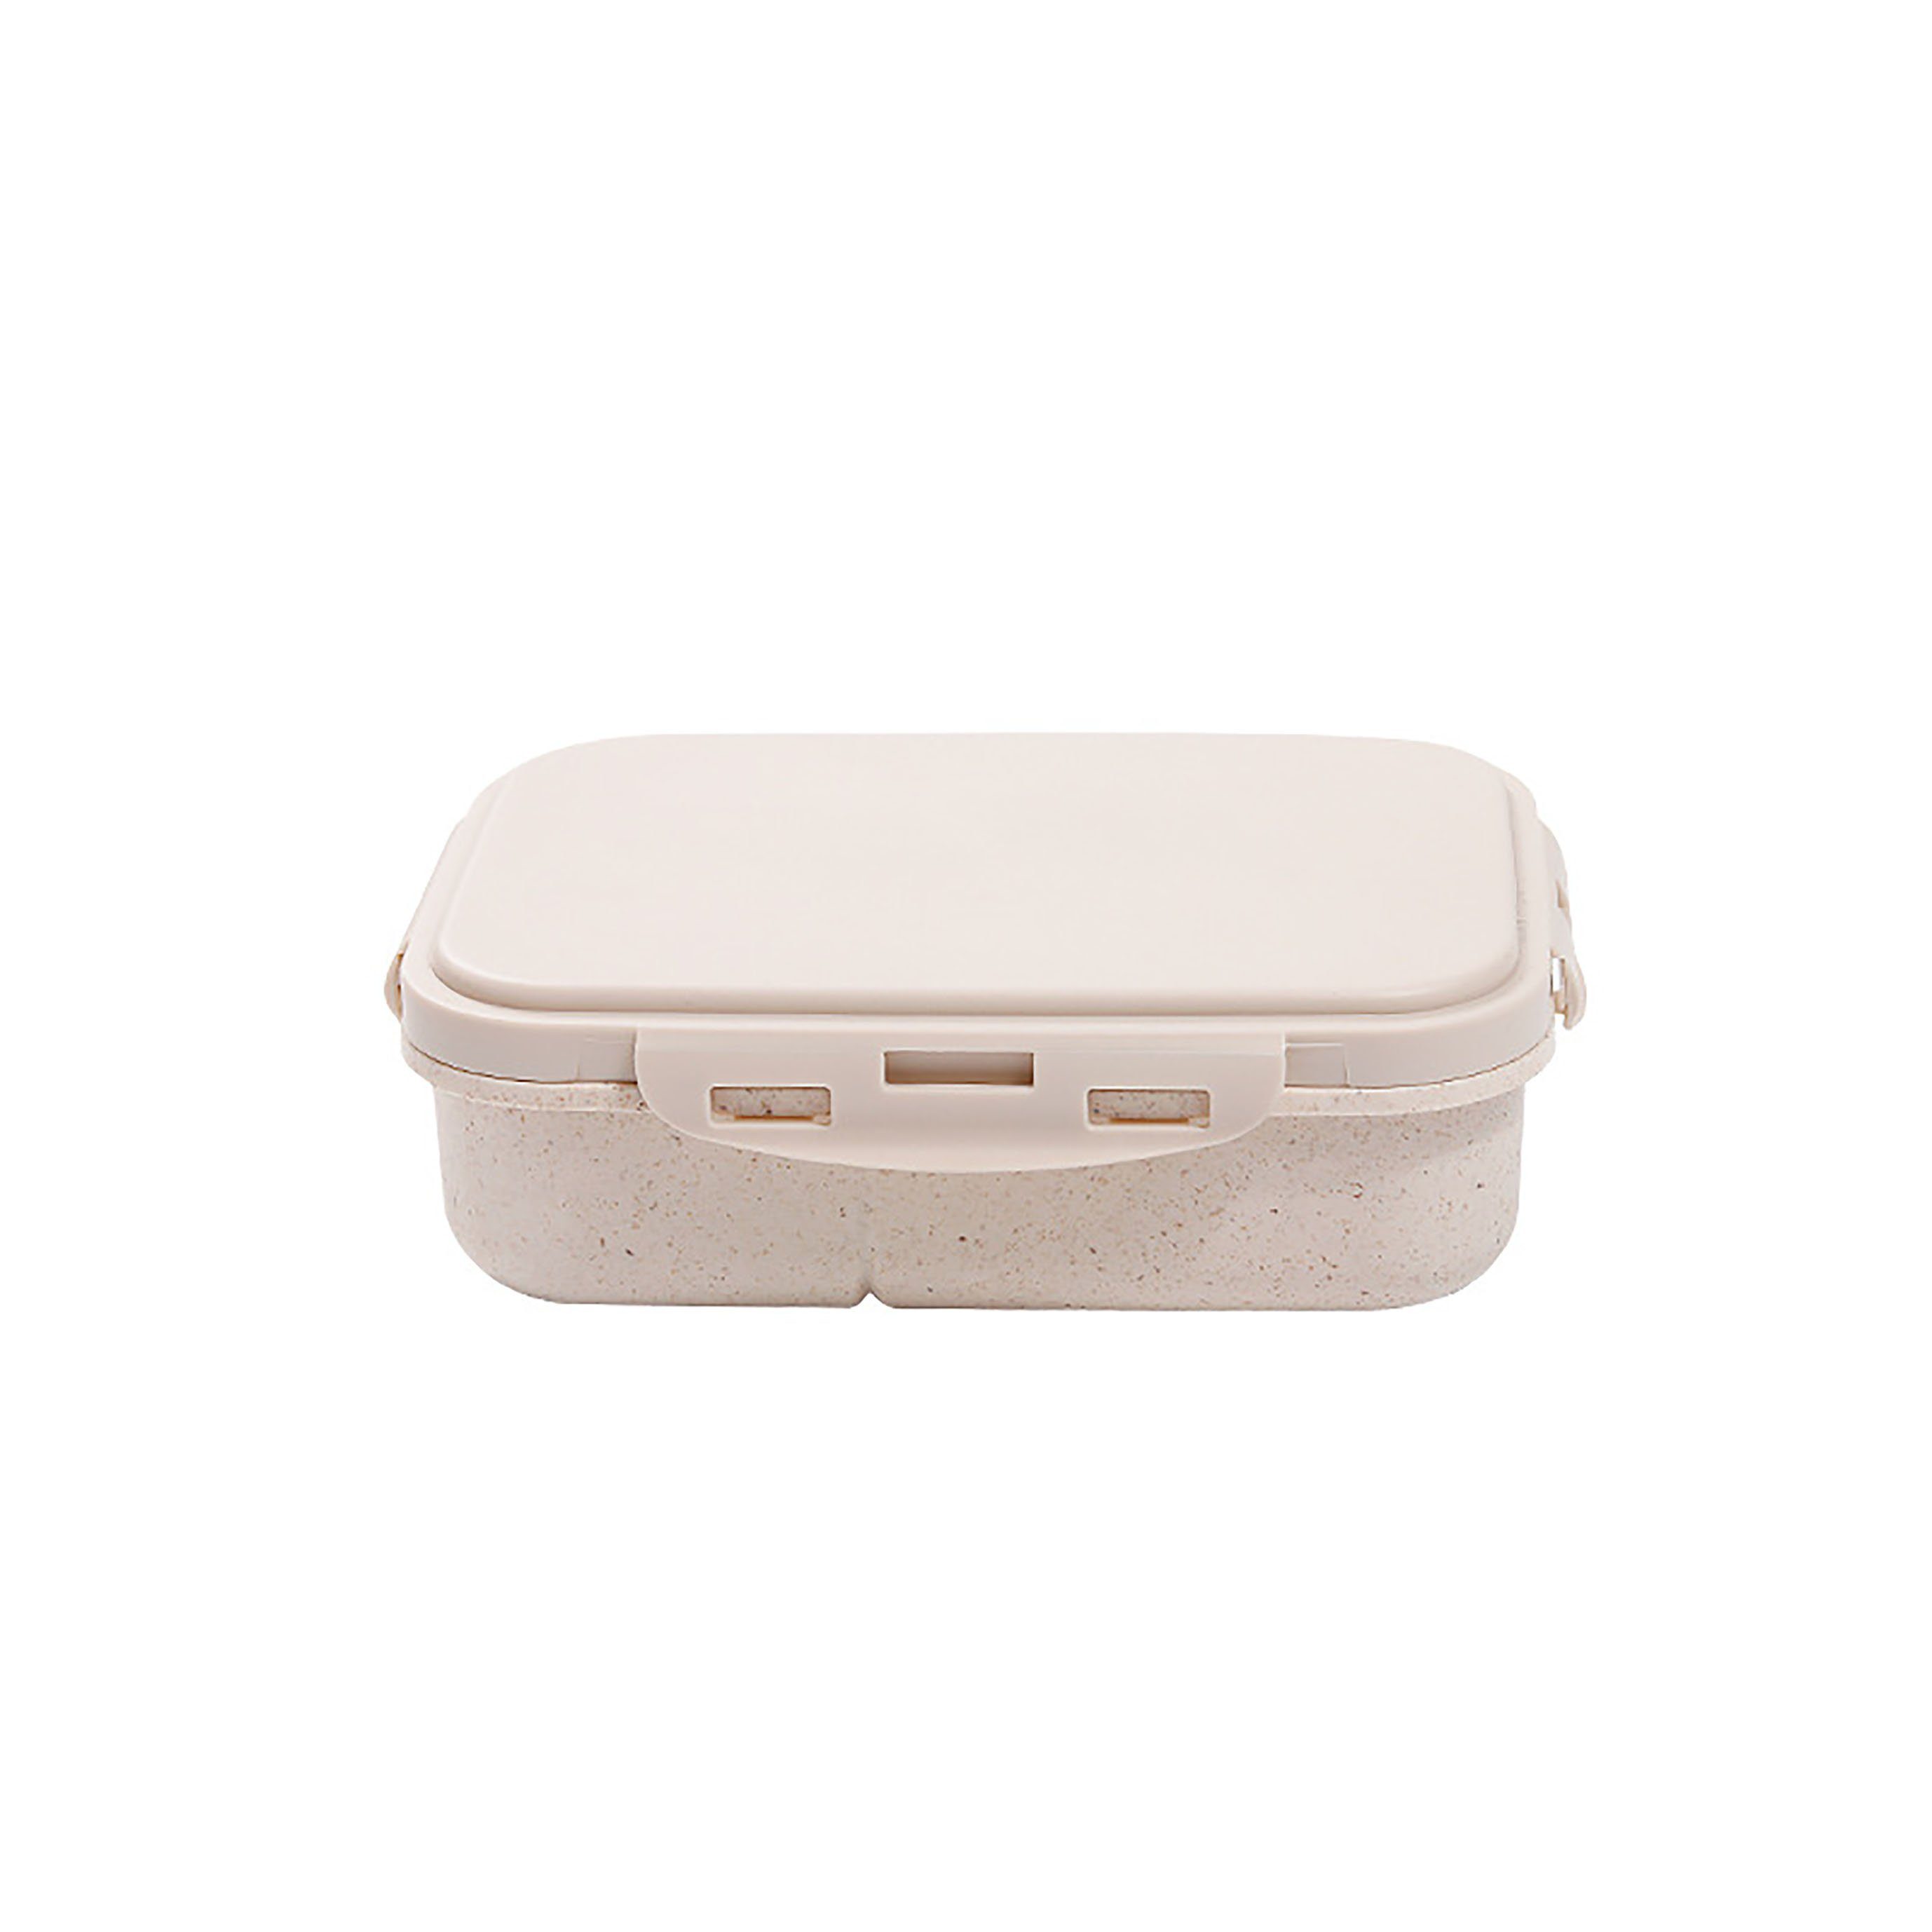 günstig SRRINM Lunchbox Plastik Lunch Box Fach Bento Box